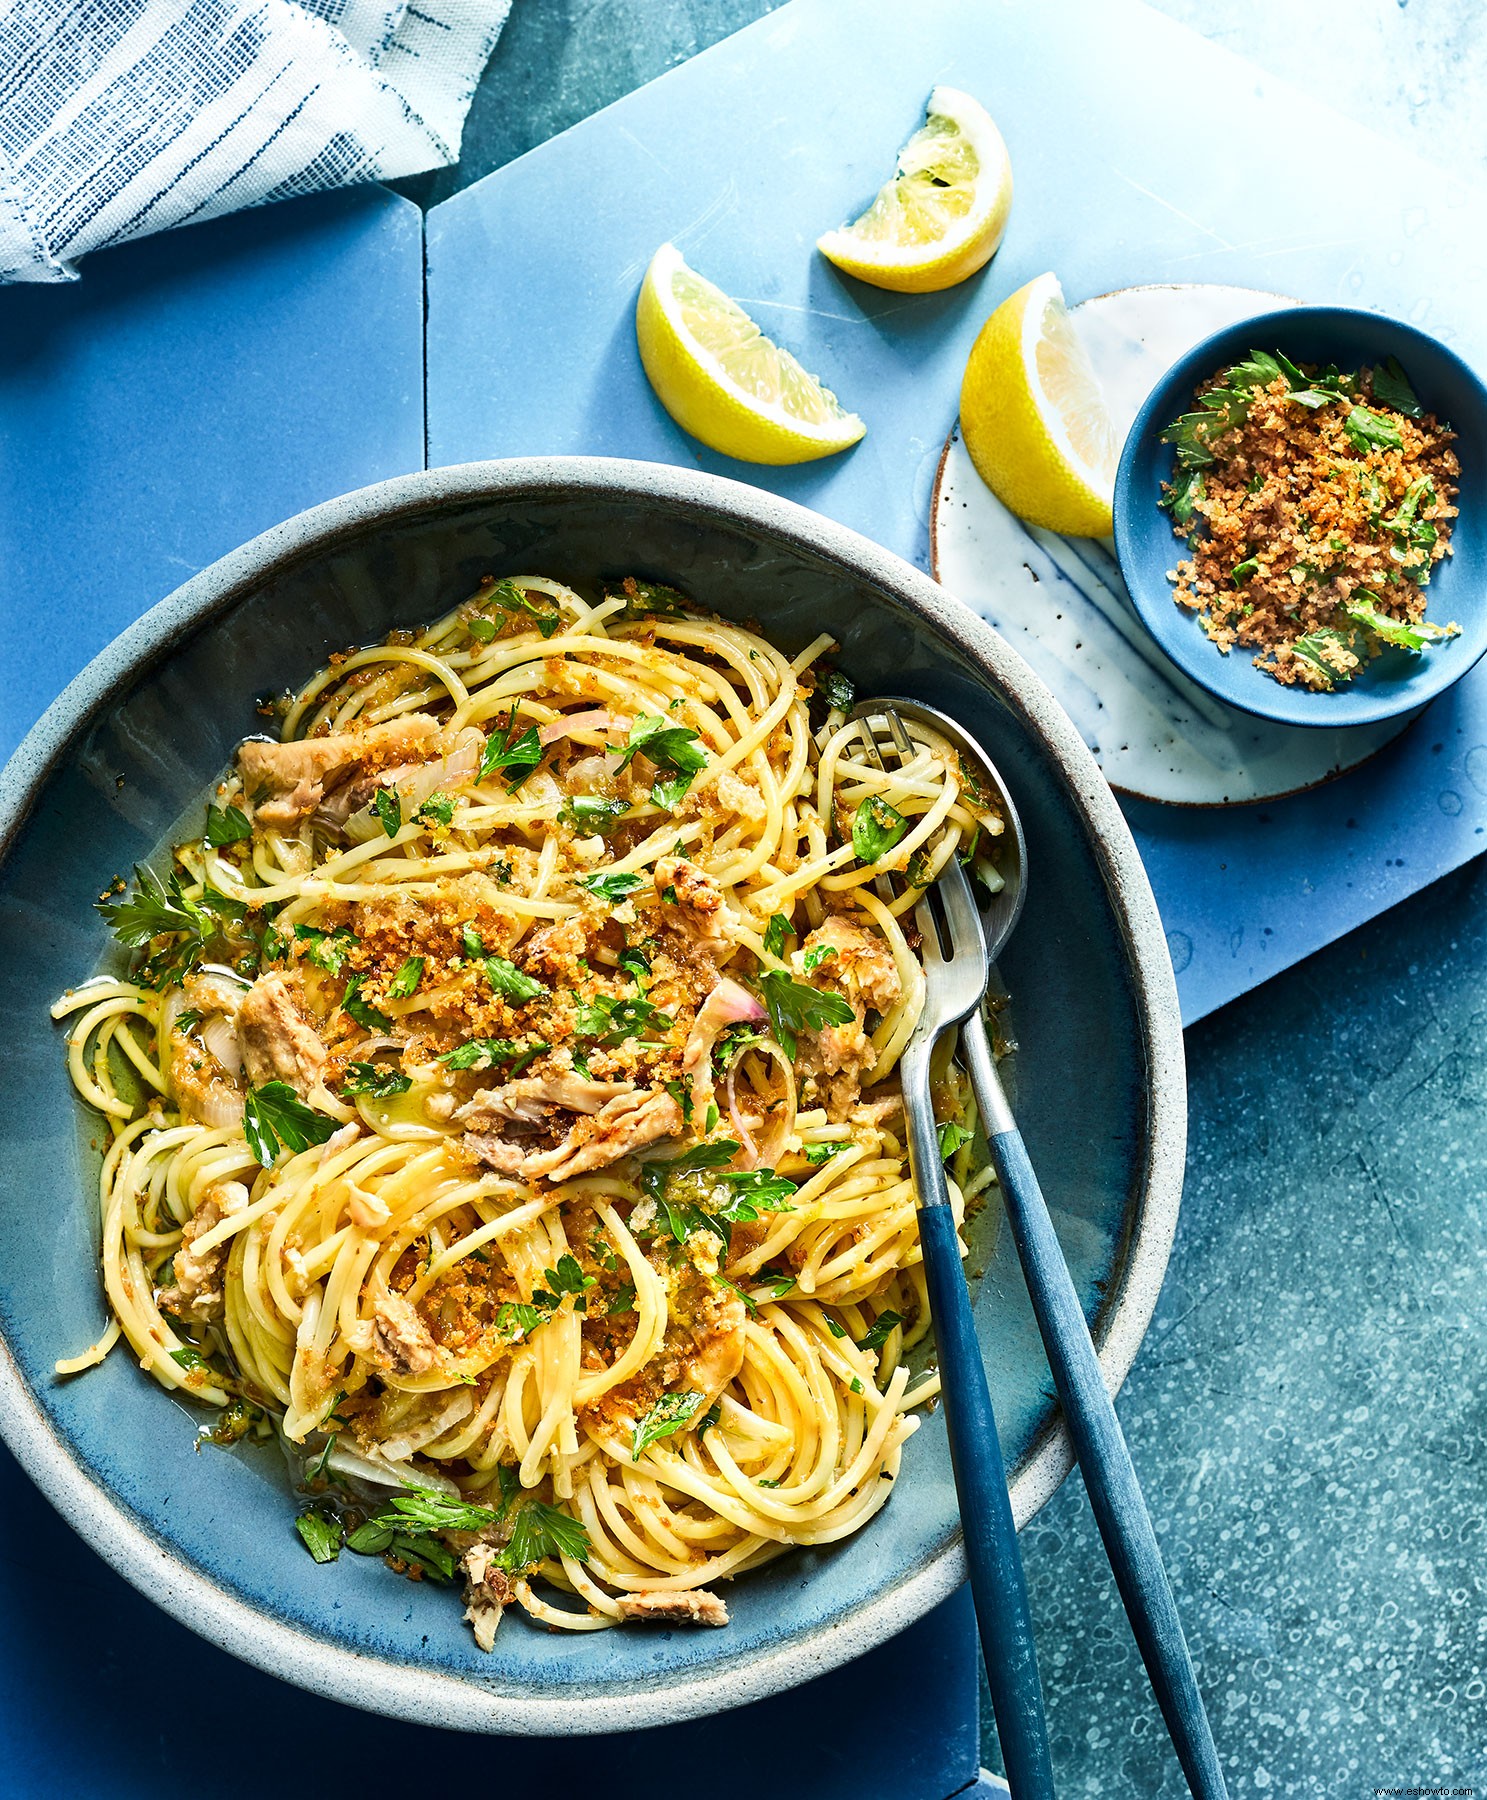 Receta de espaguetis al limón con sardinas y pan rallado 